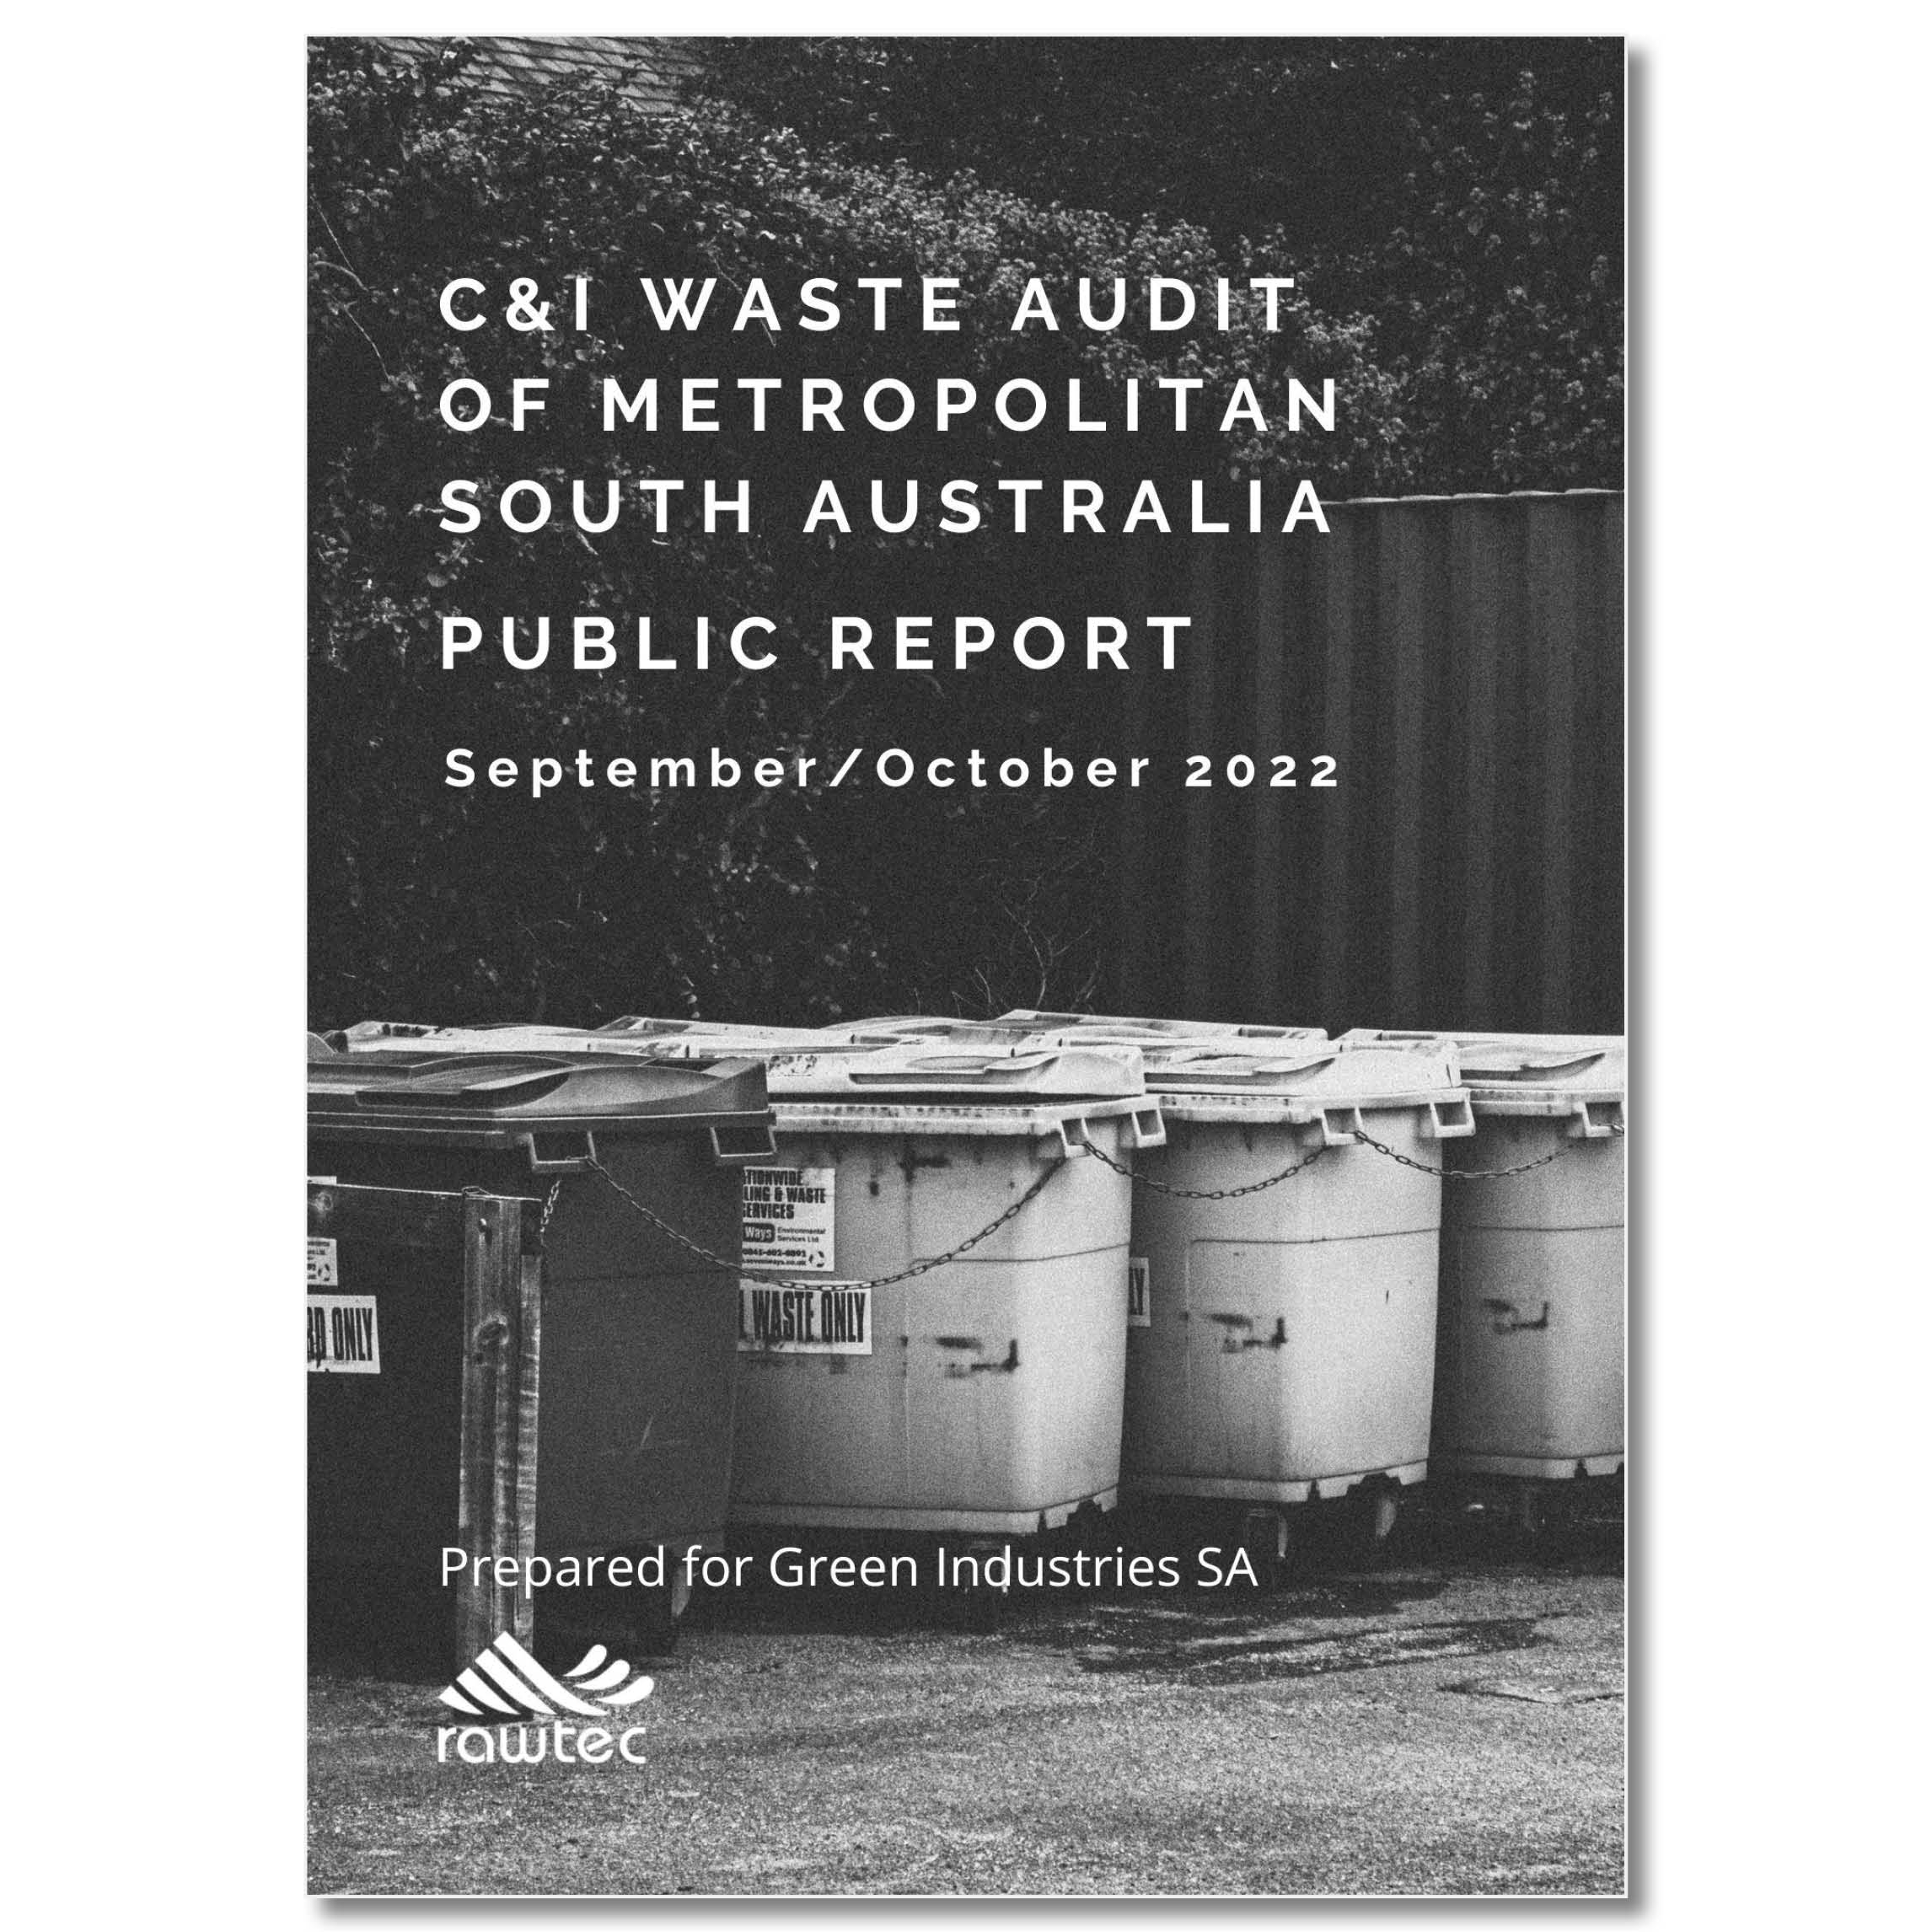 C&I waste audit of metropolitan South Australia: Public report (2022)